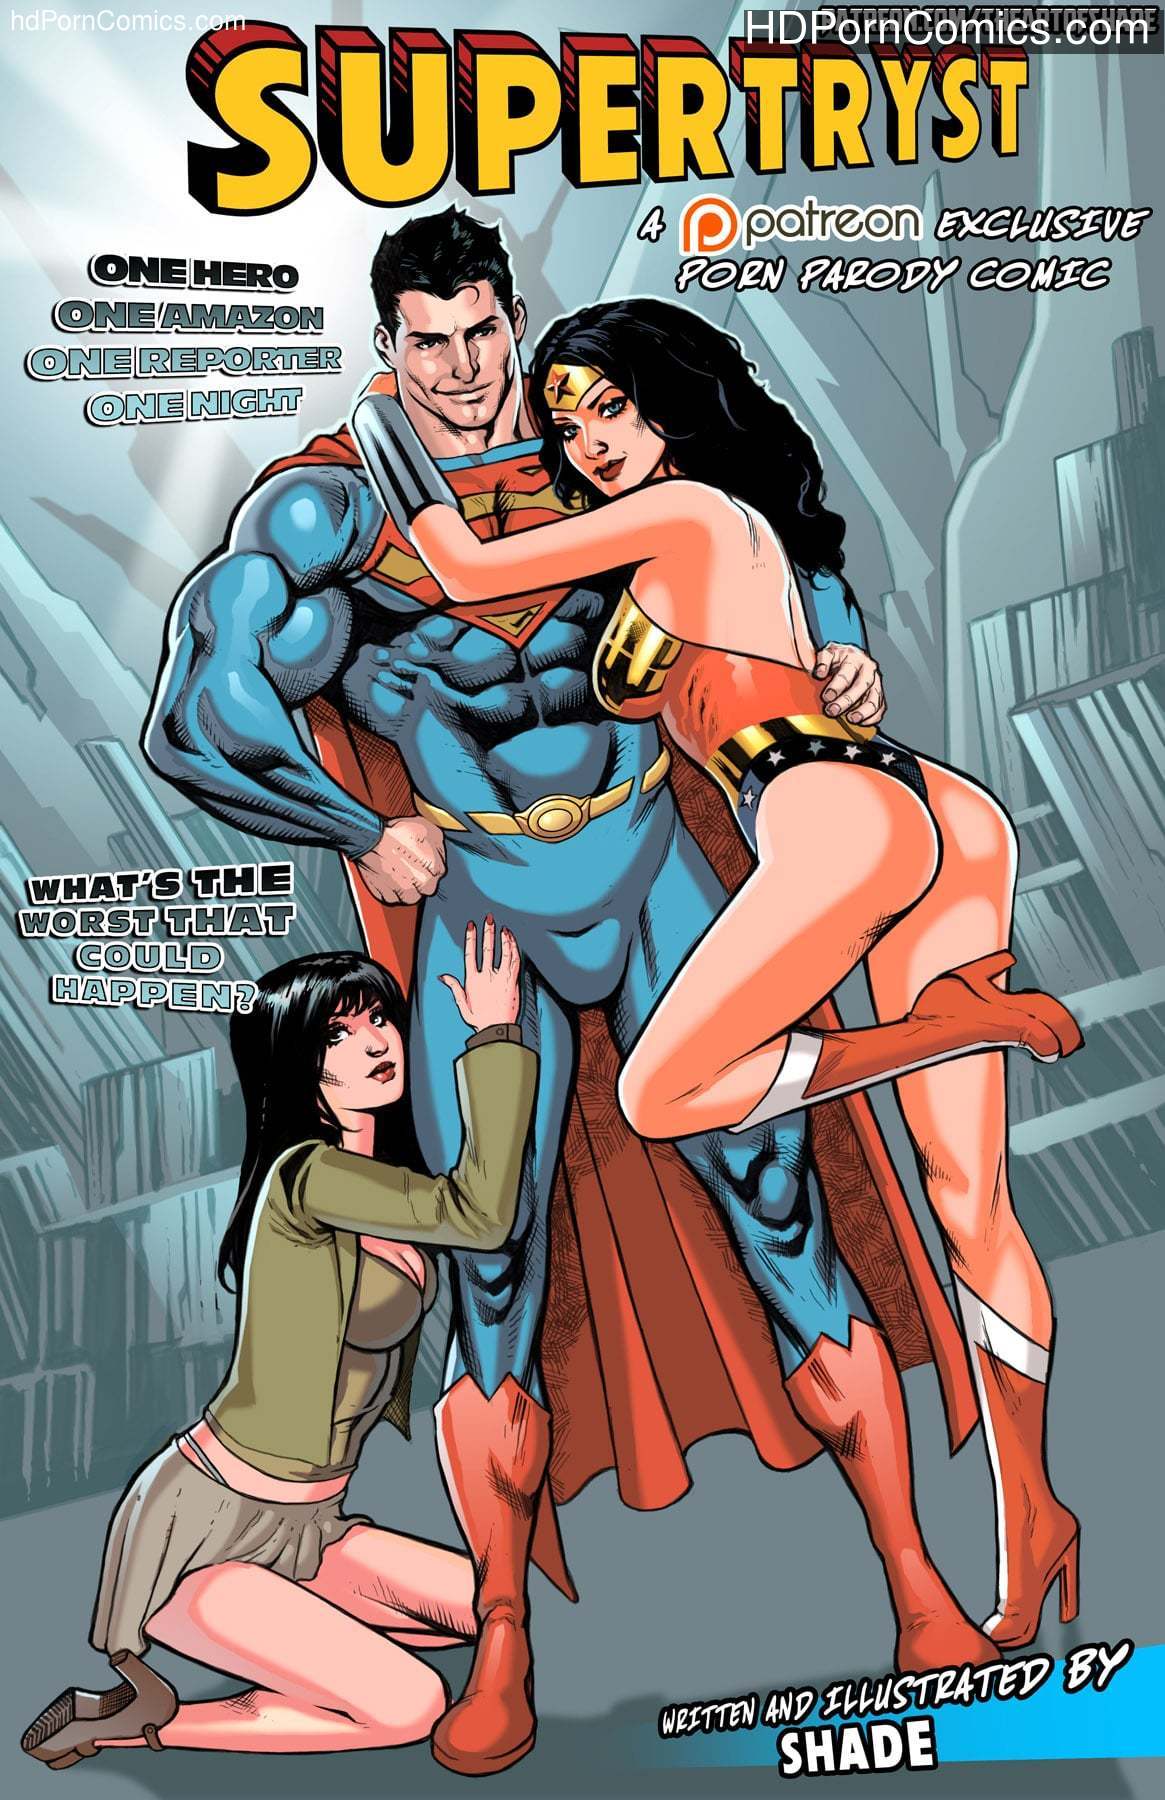 Supertryst- Superman free Cartoon Porn Comic | HD Porn Comics